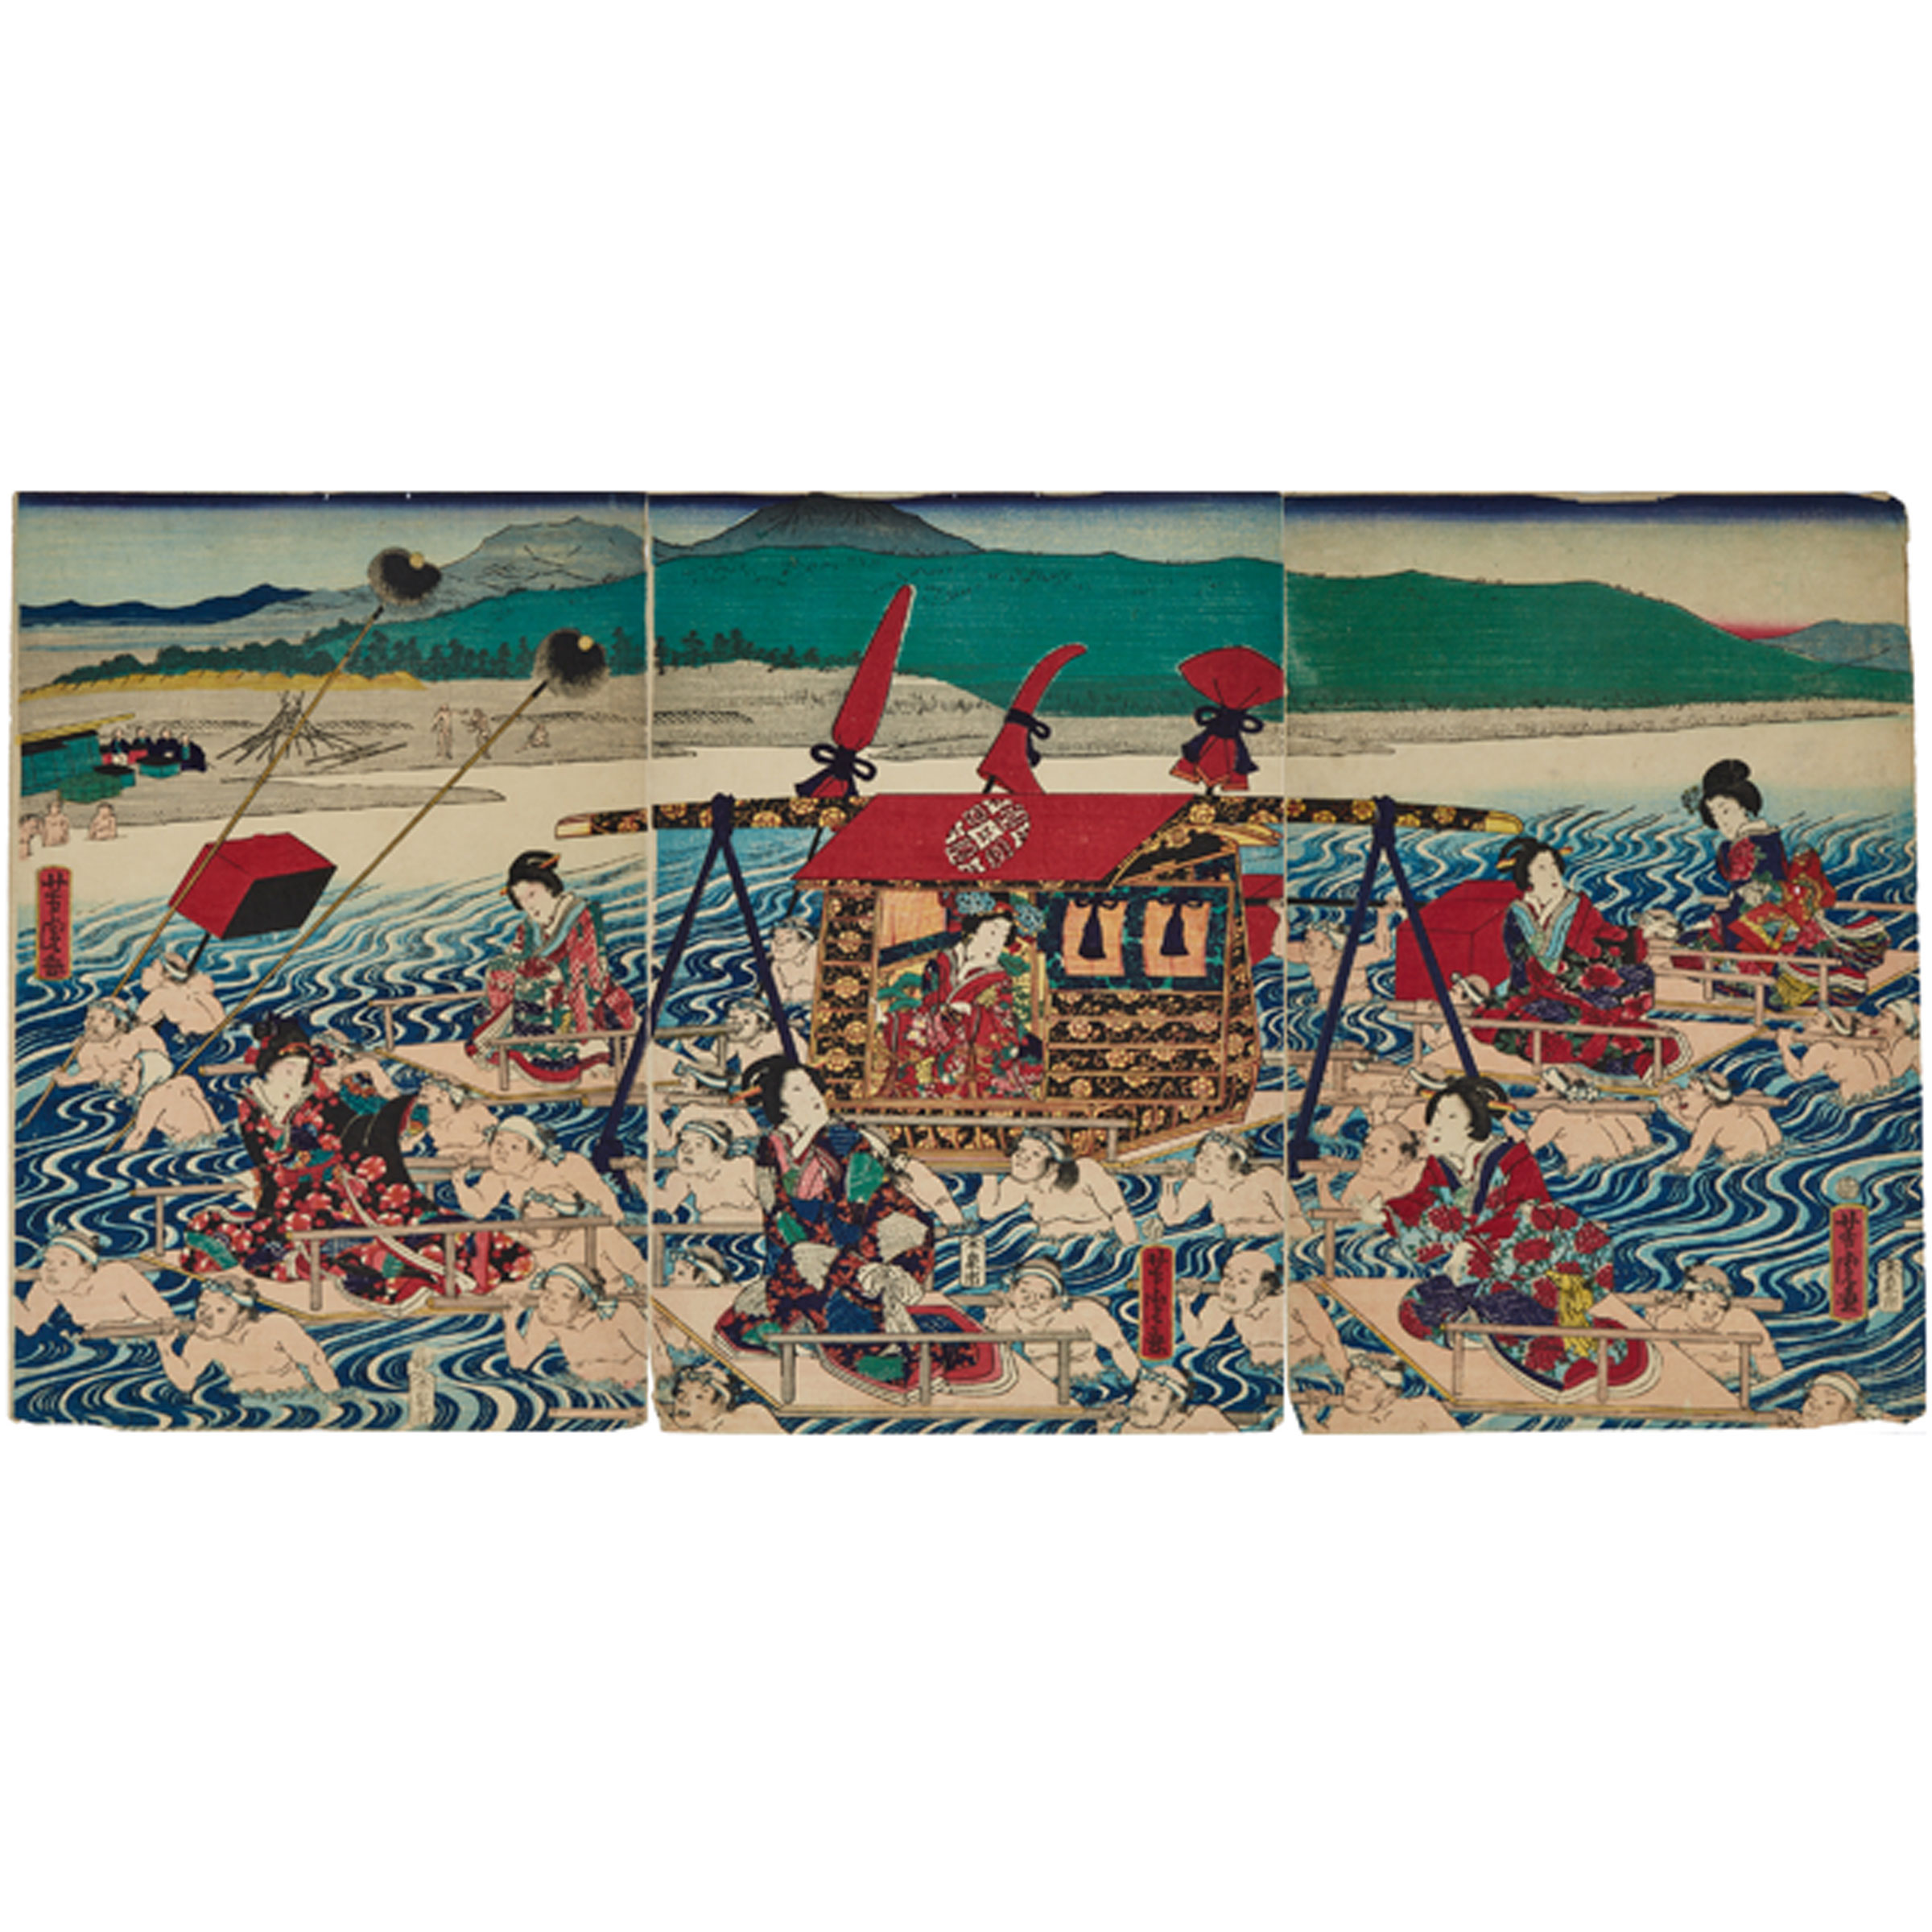 Utagawa Yoshitora (active 1850-1880), Crossing the River Triptych, Circa 1860s